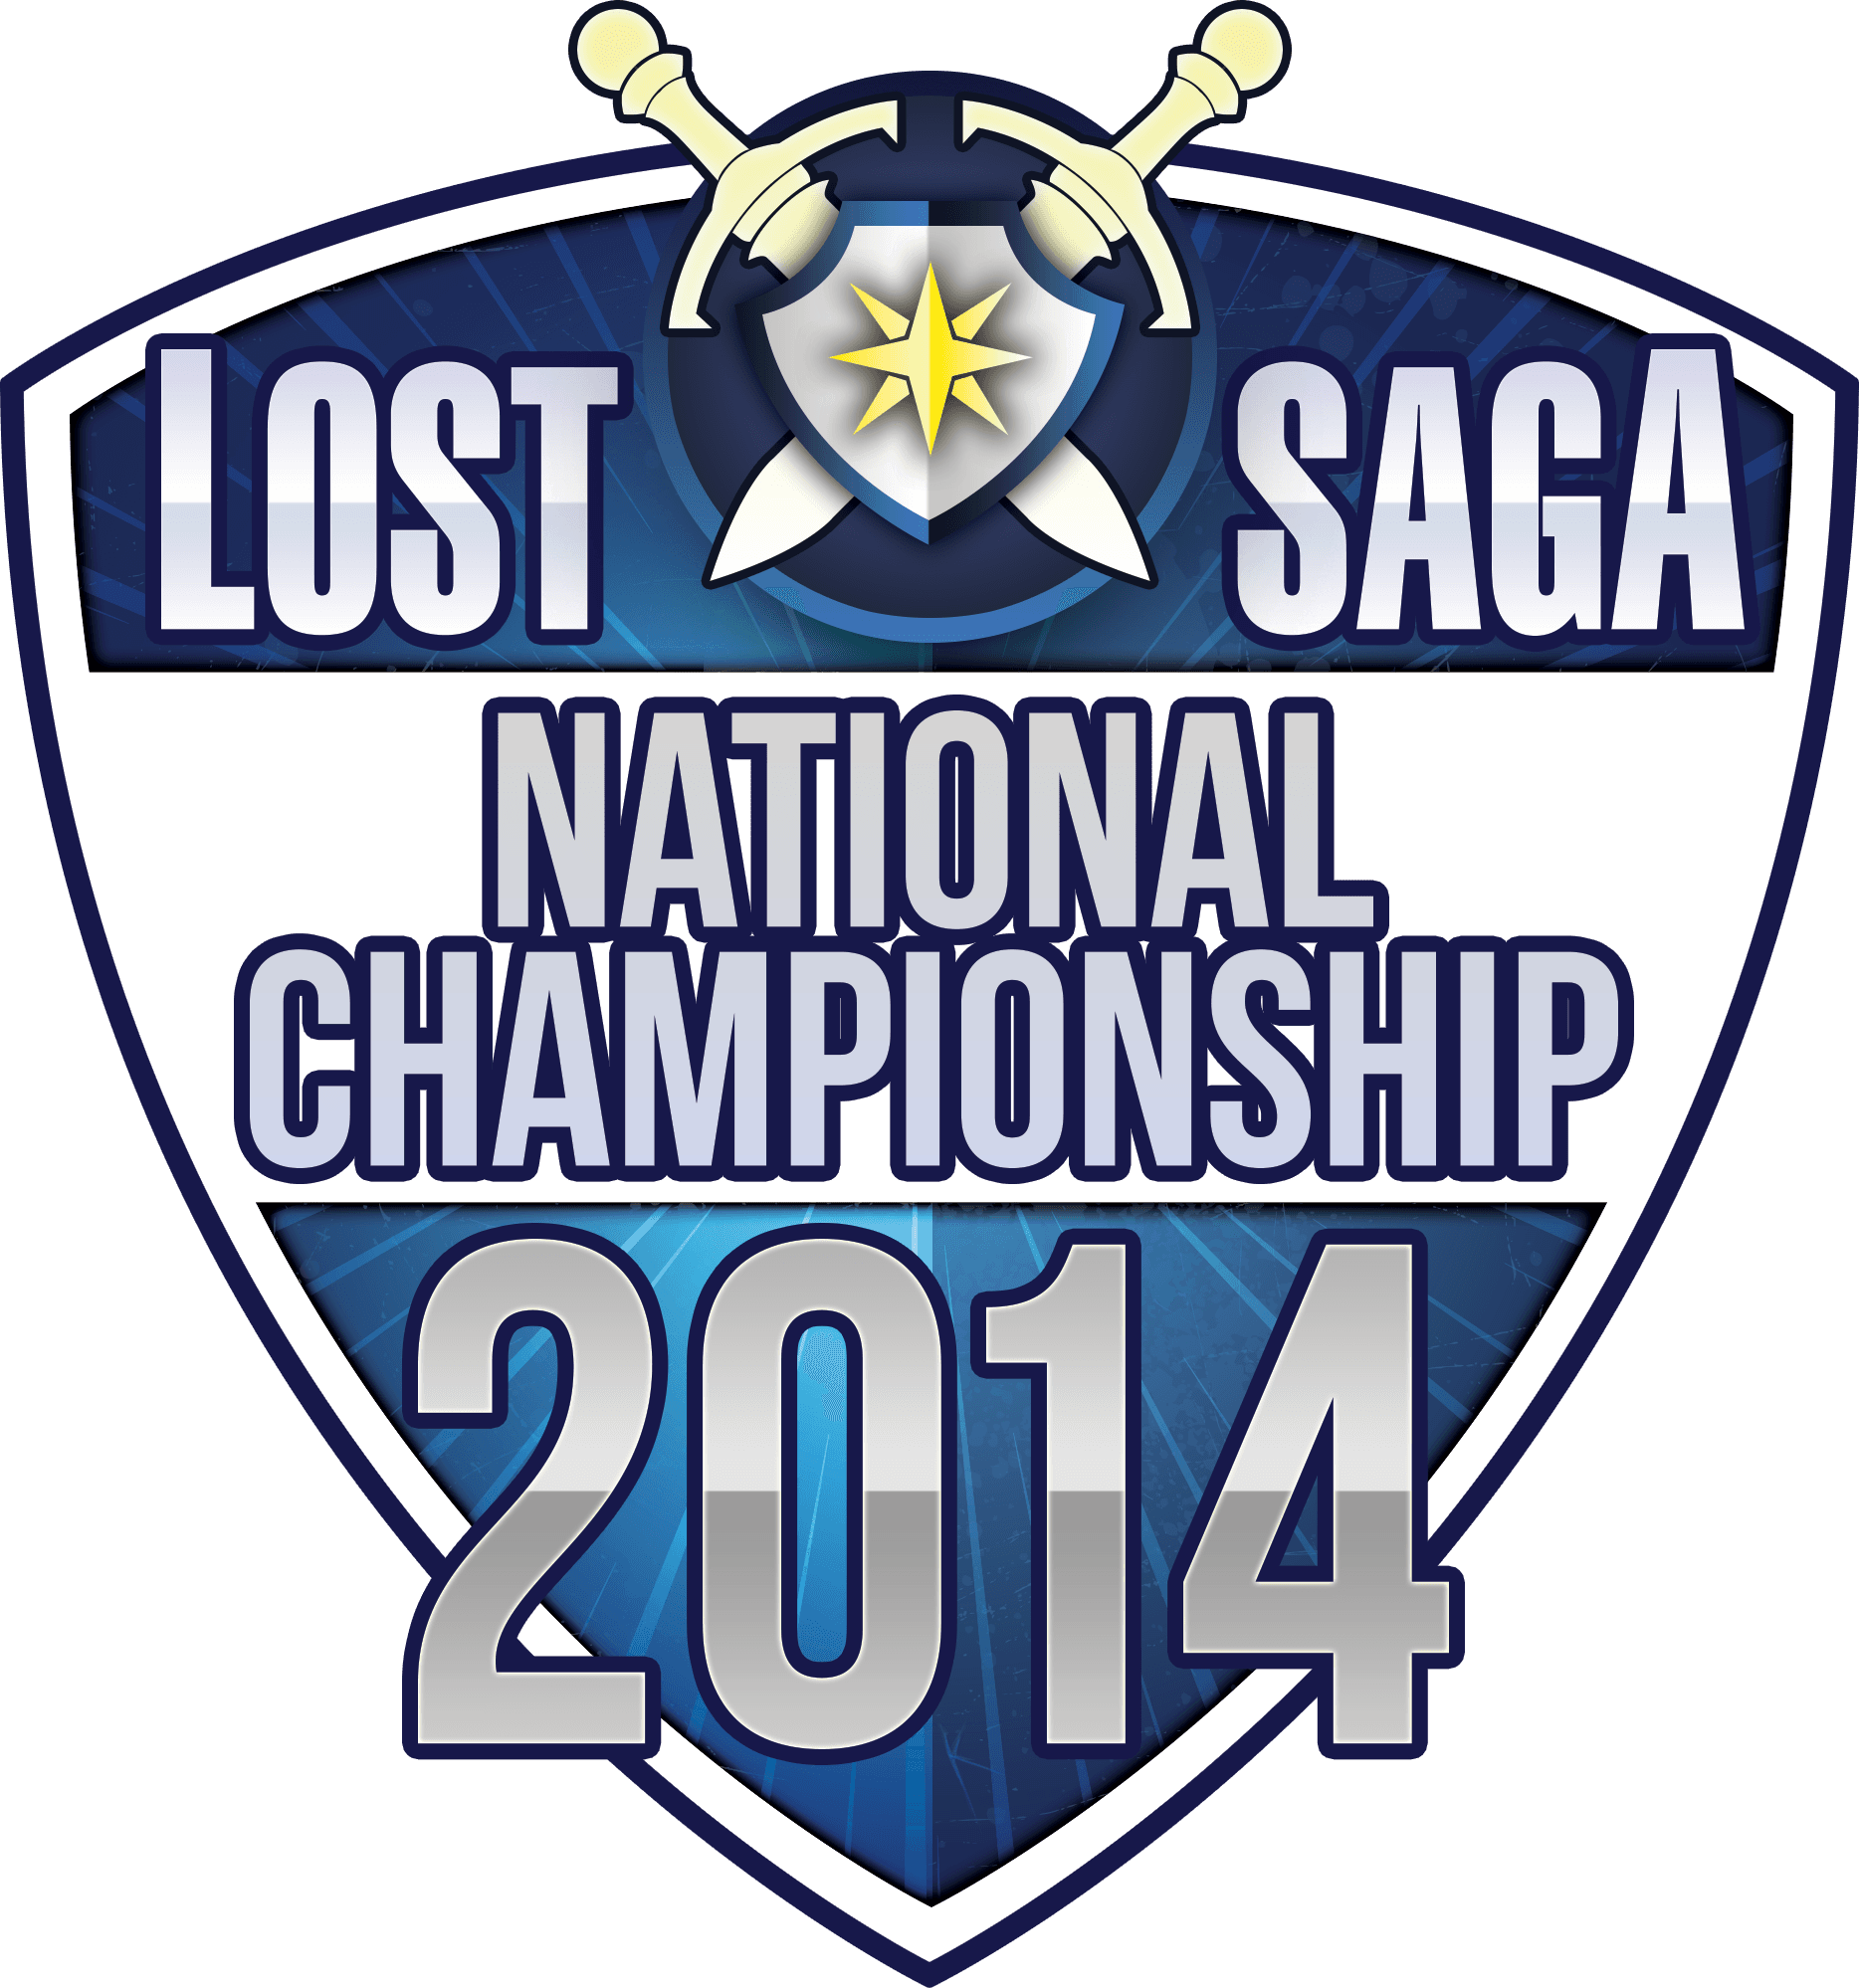 Lost Saga National Championship ( LSNC ) 2014